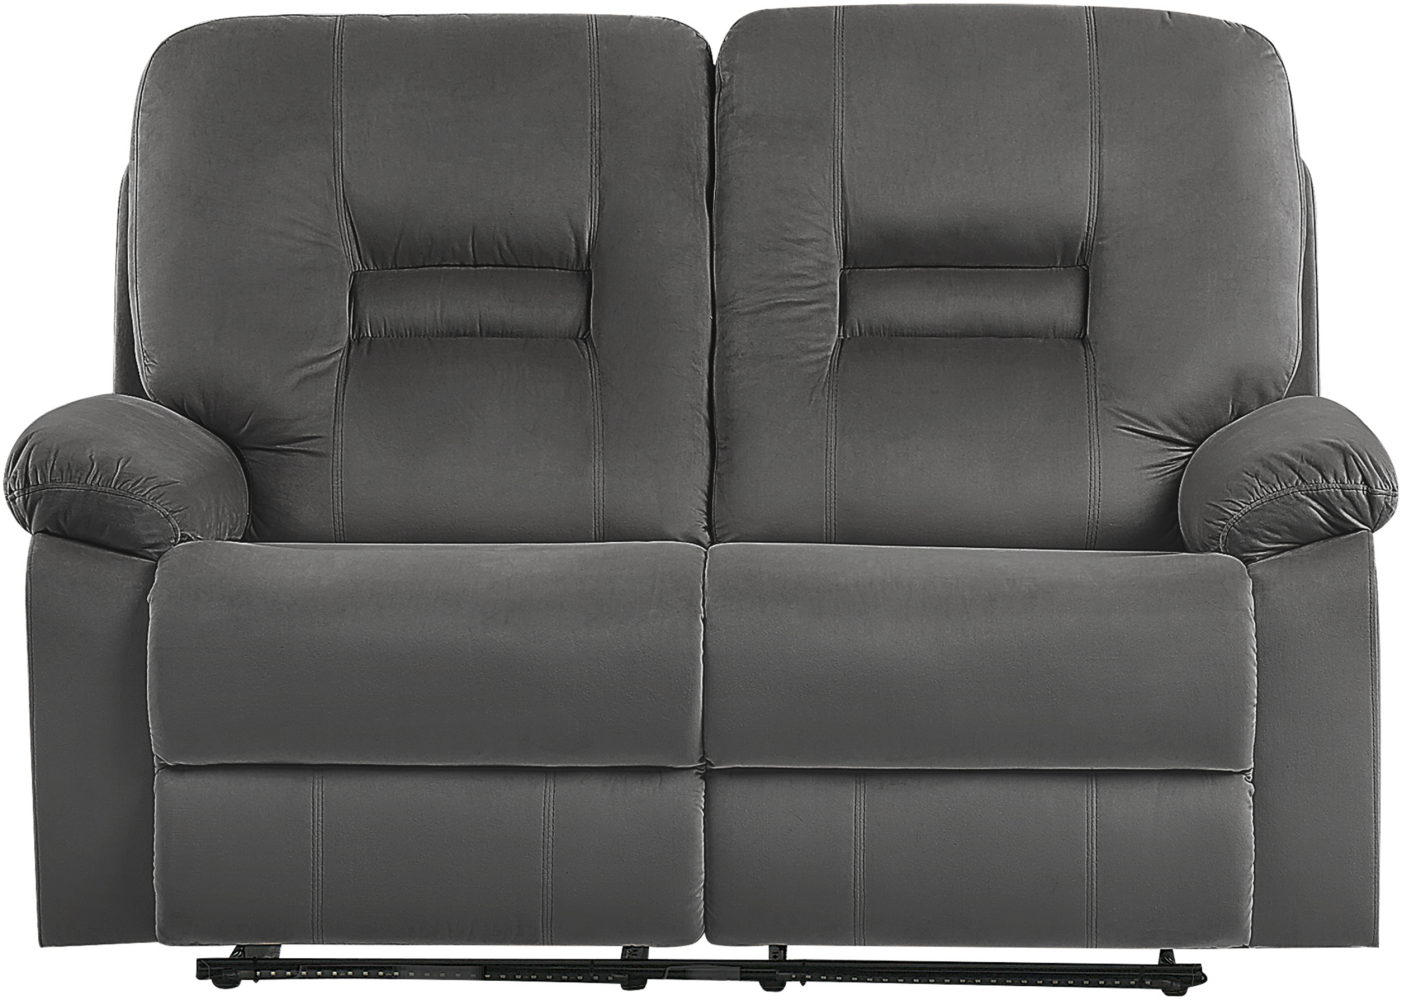 2-Sitzer Sofa Samtstoff dunkelgrau LED-Beleuchtung USB-Port elektrisch verstellbar BERGEN Bild 1